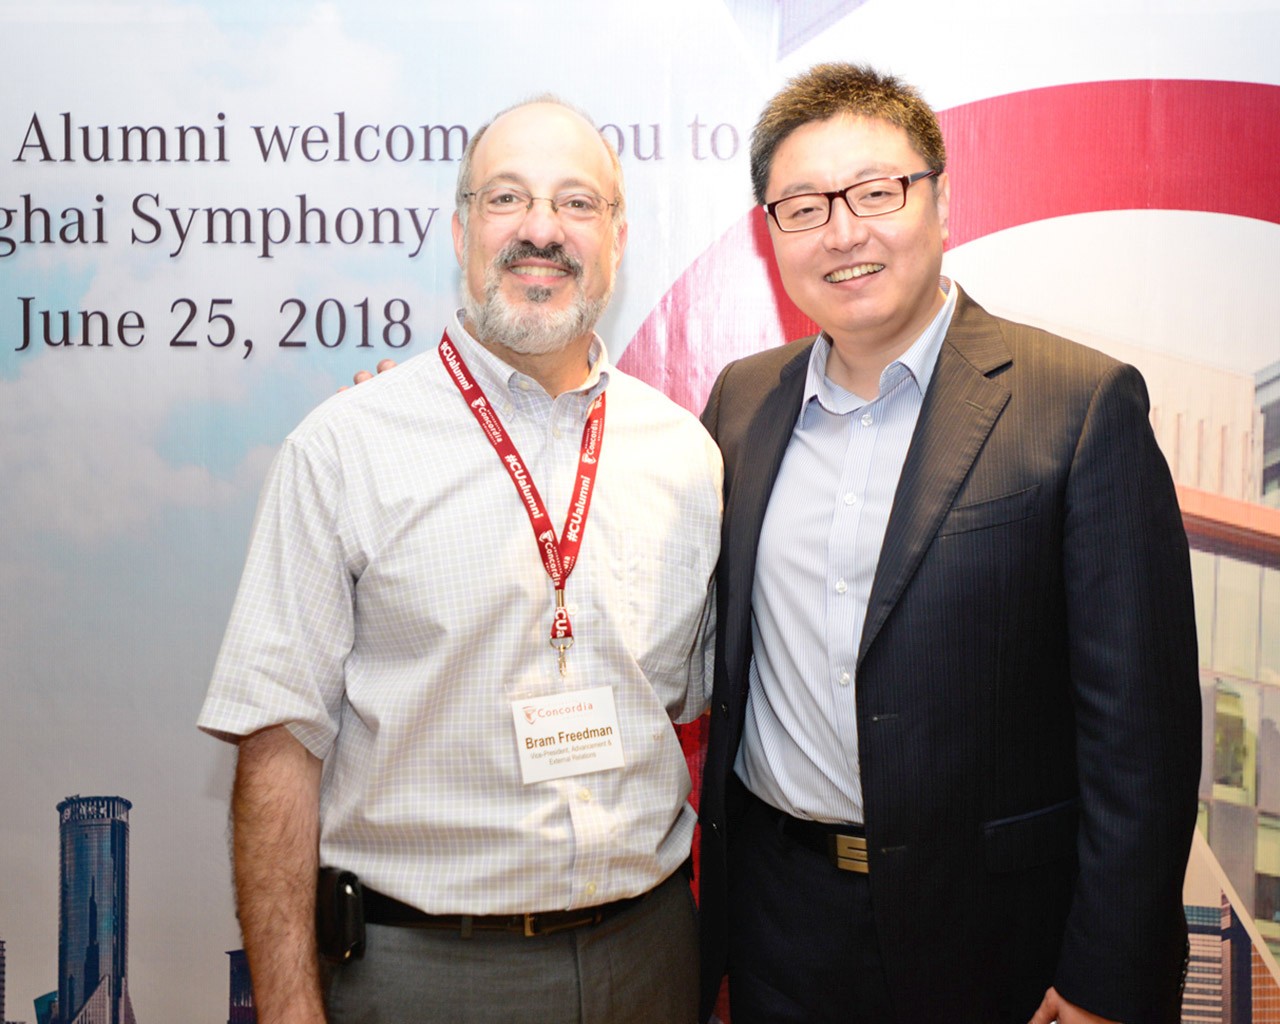 Shanghai alumni reception - June 2018